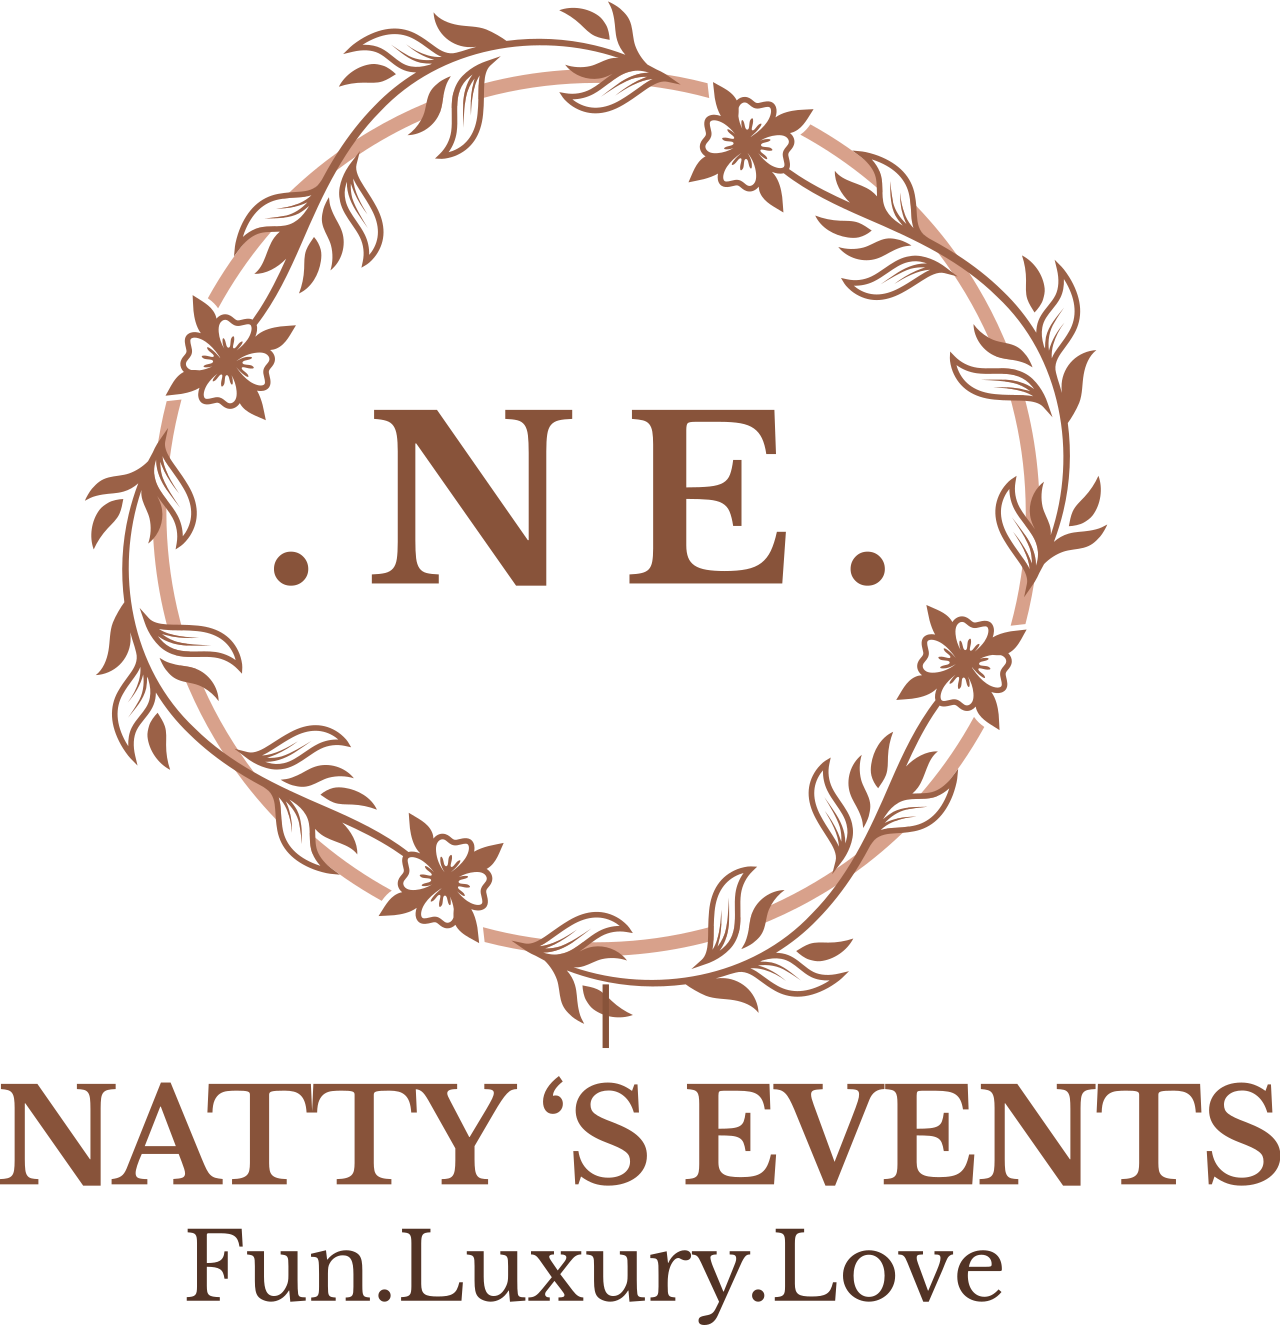 Natty ‘s events 's logo